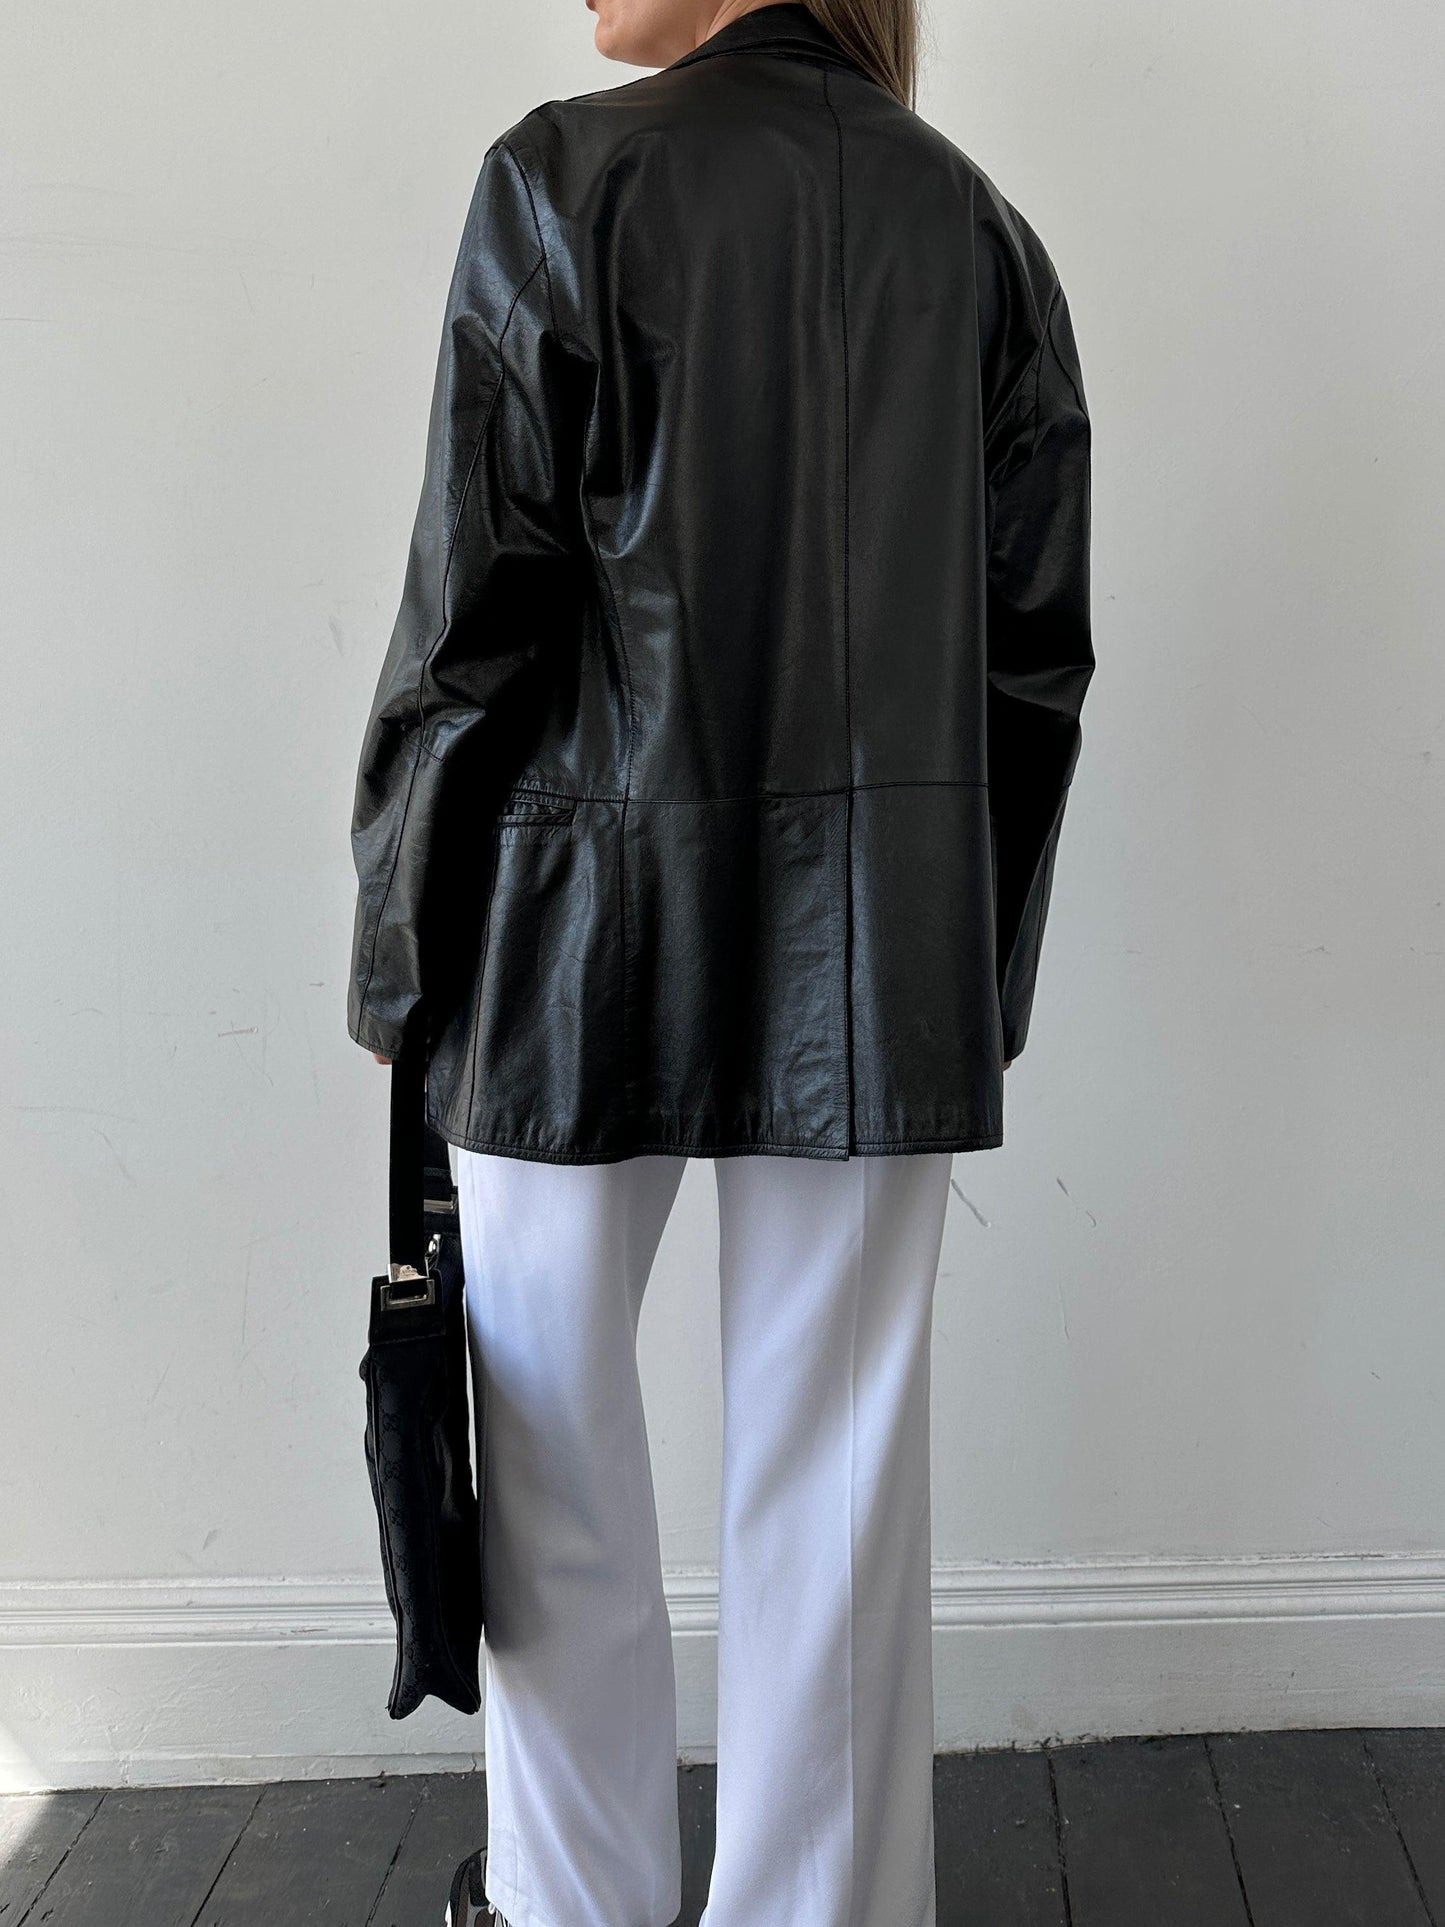 Emporio Armani Leather Blazer Jacket - S - Known Source